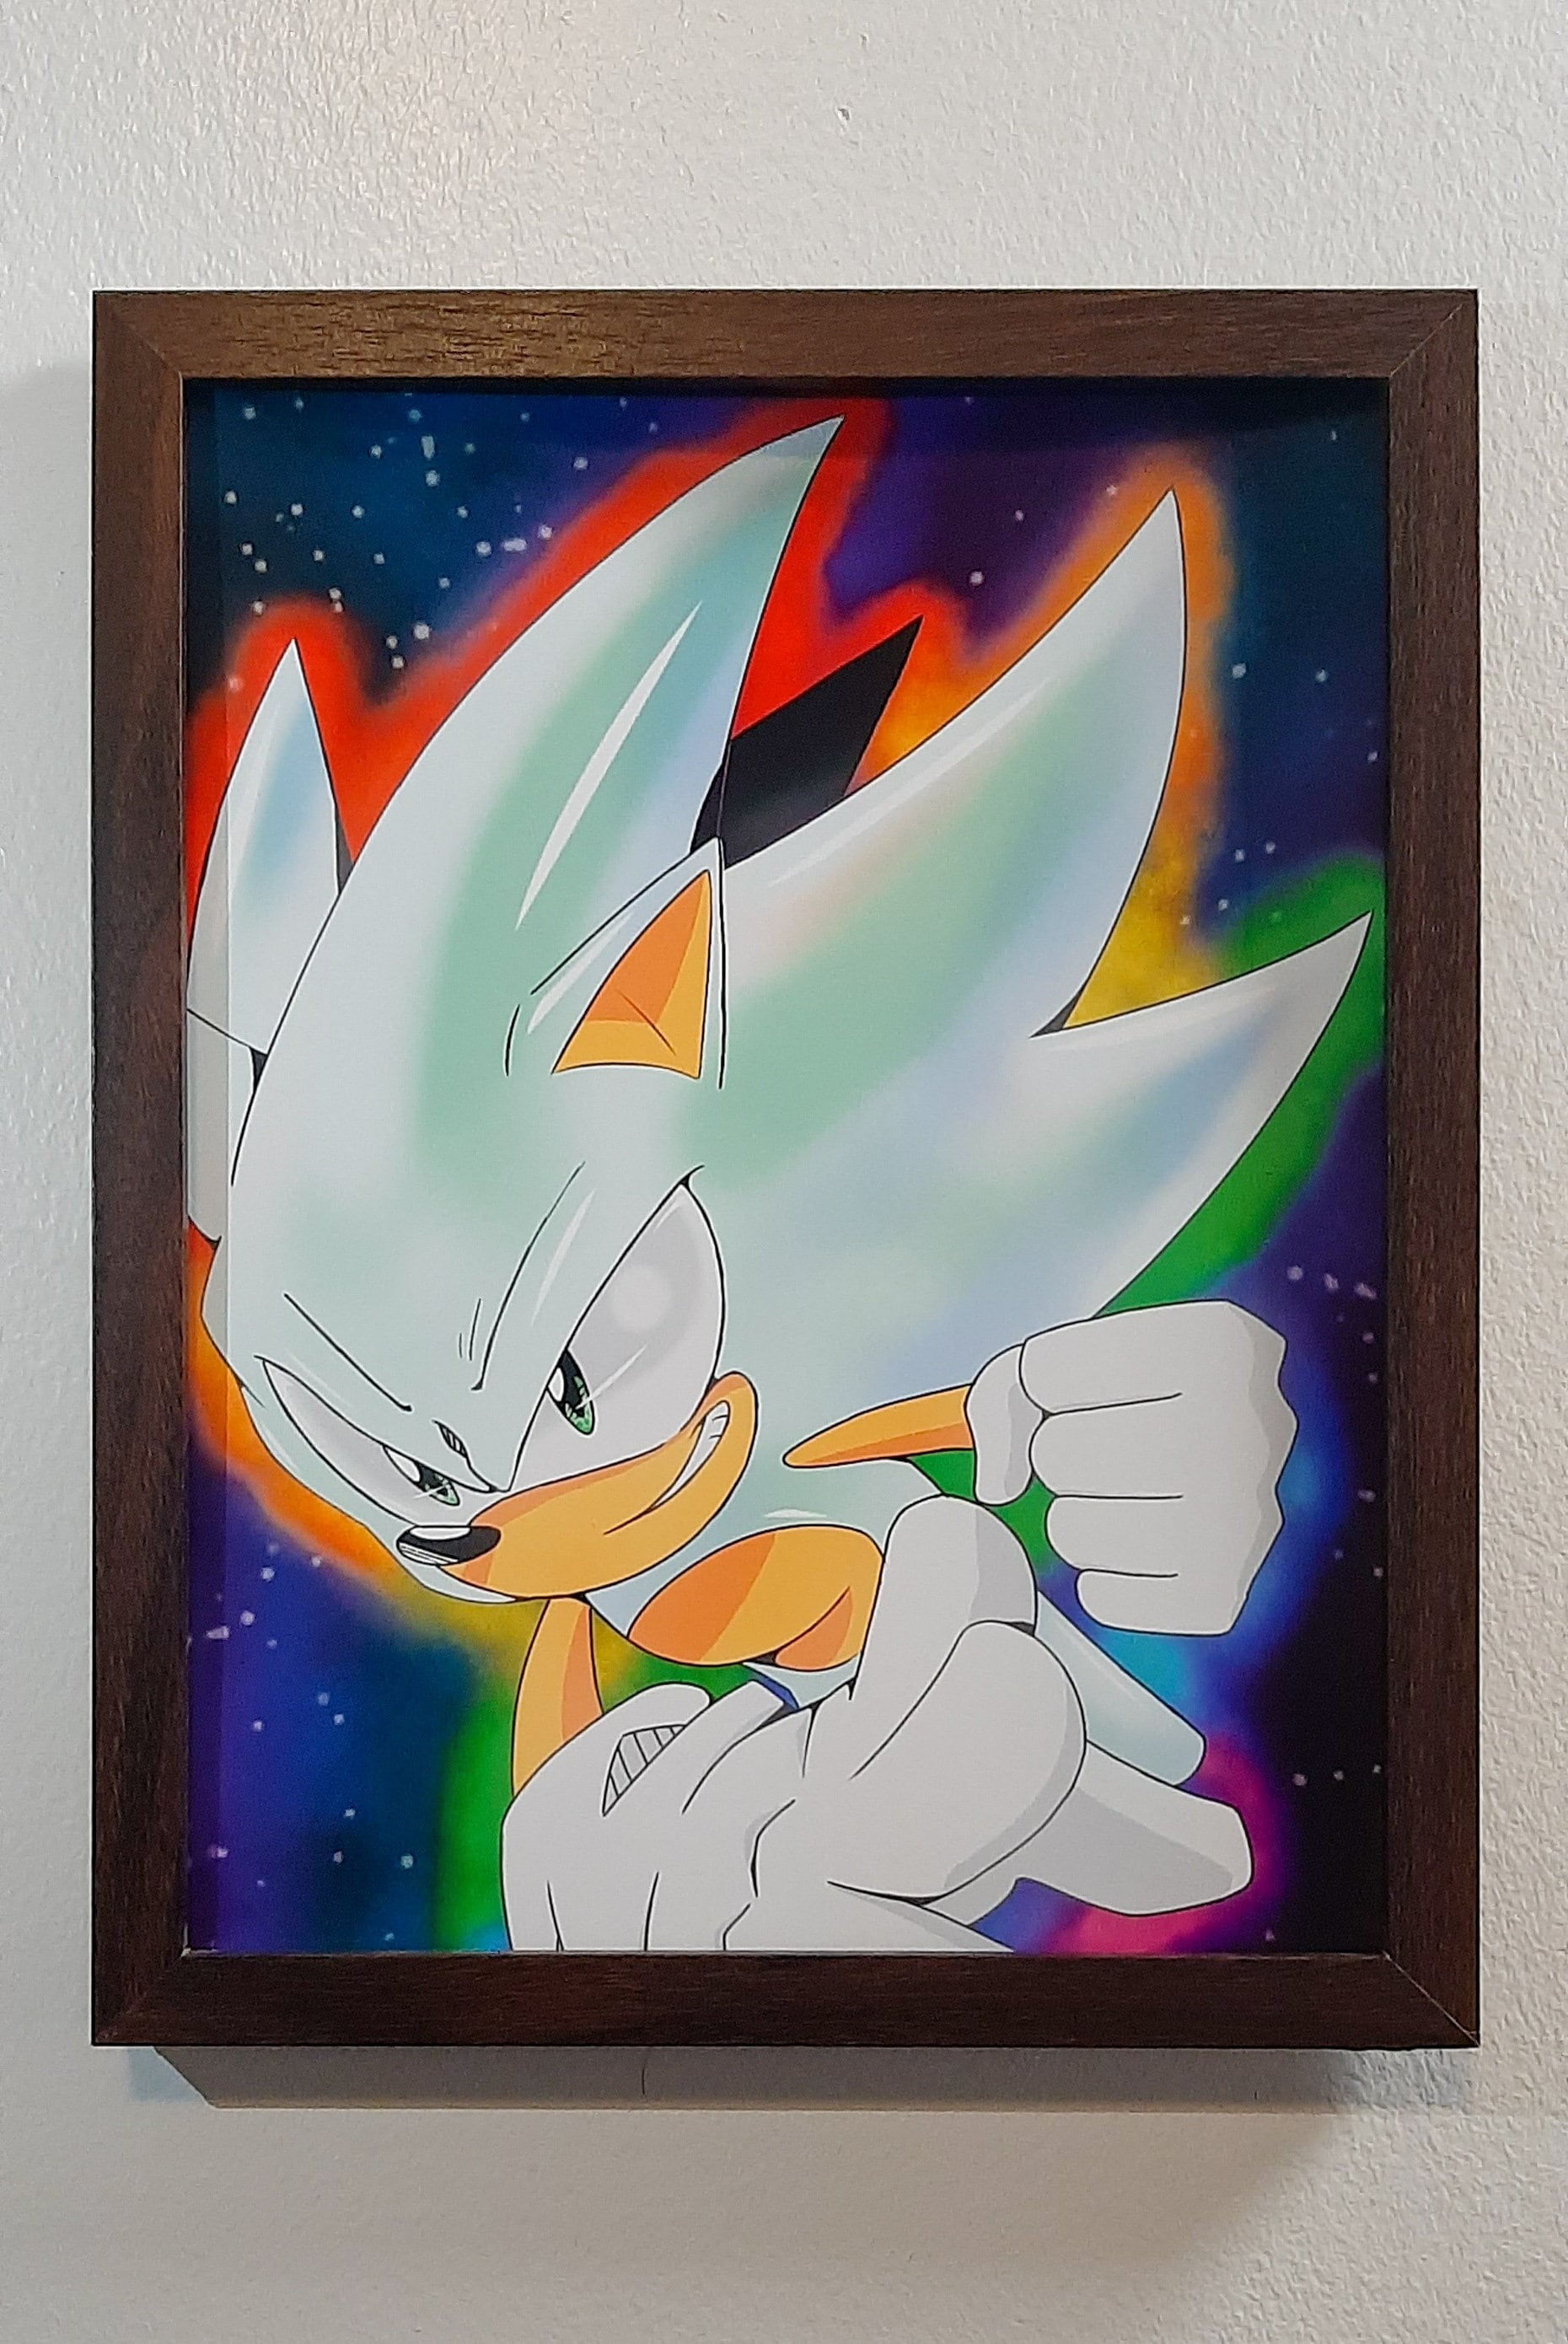 darkspine sonic  Sonic fan art, Sonic, Sonic the hedgehog